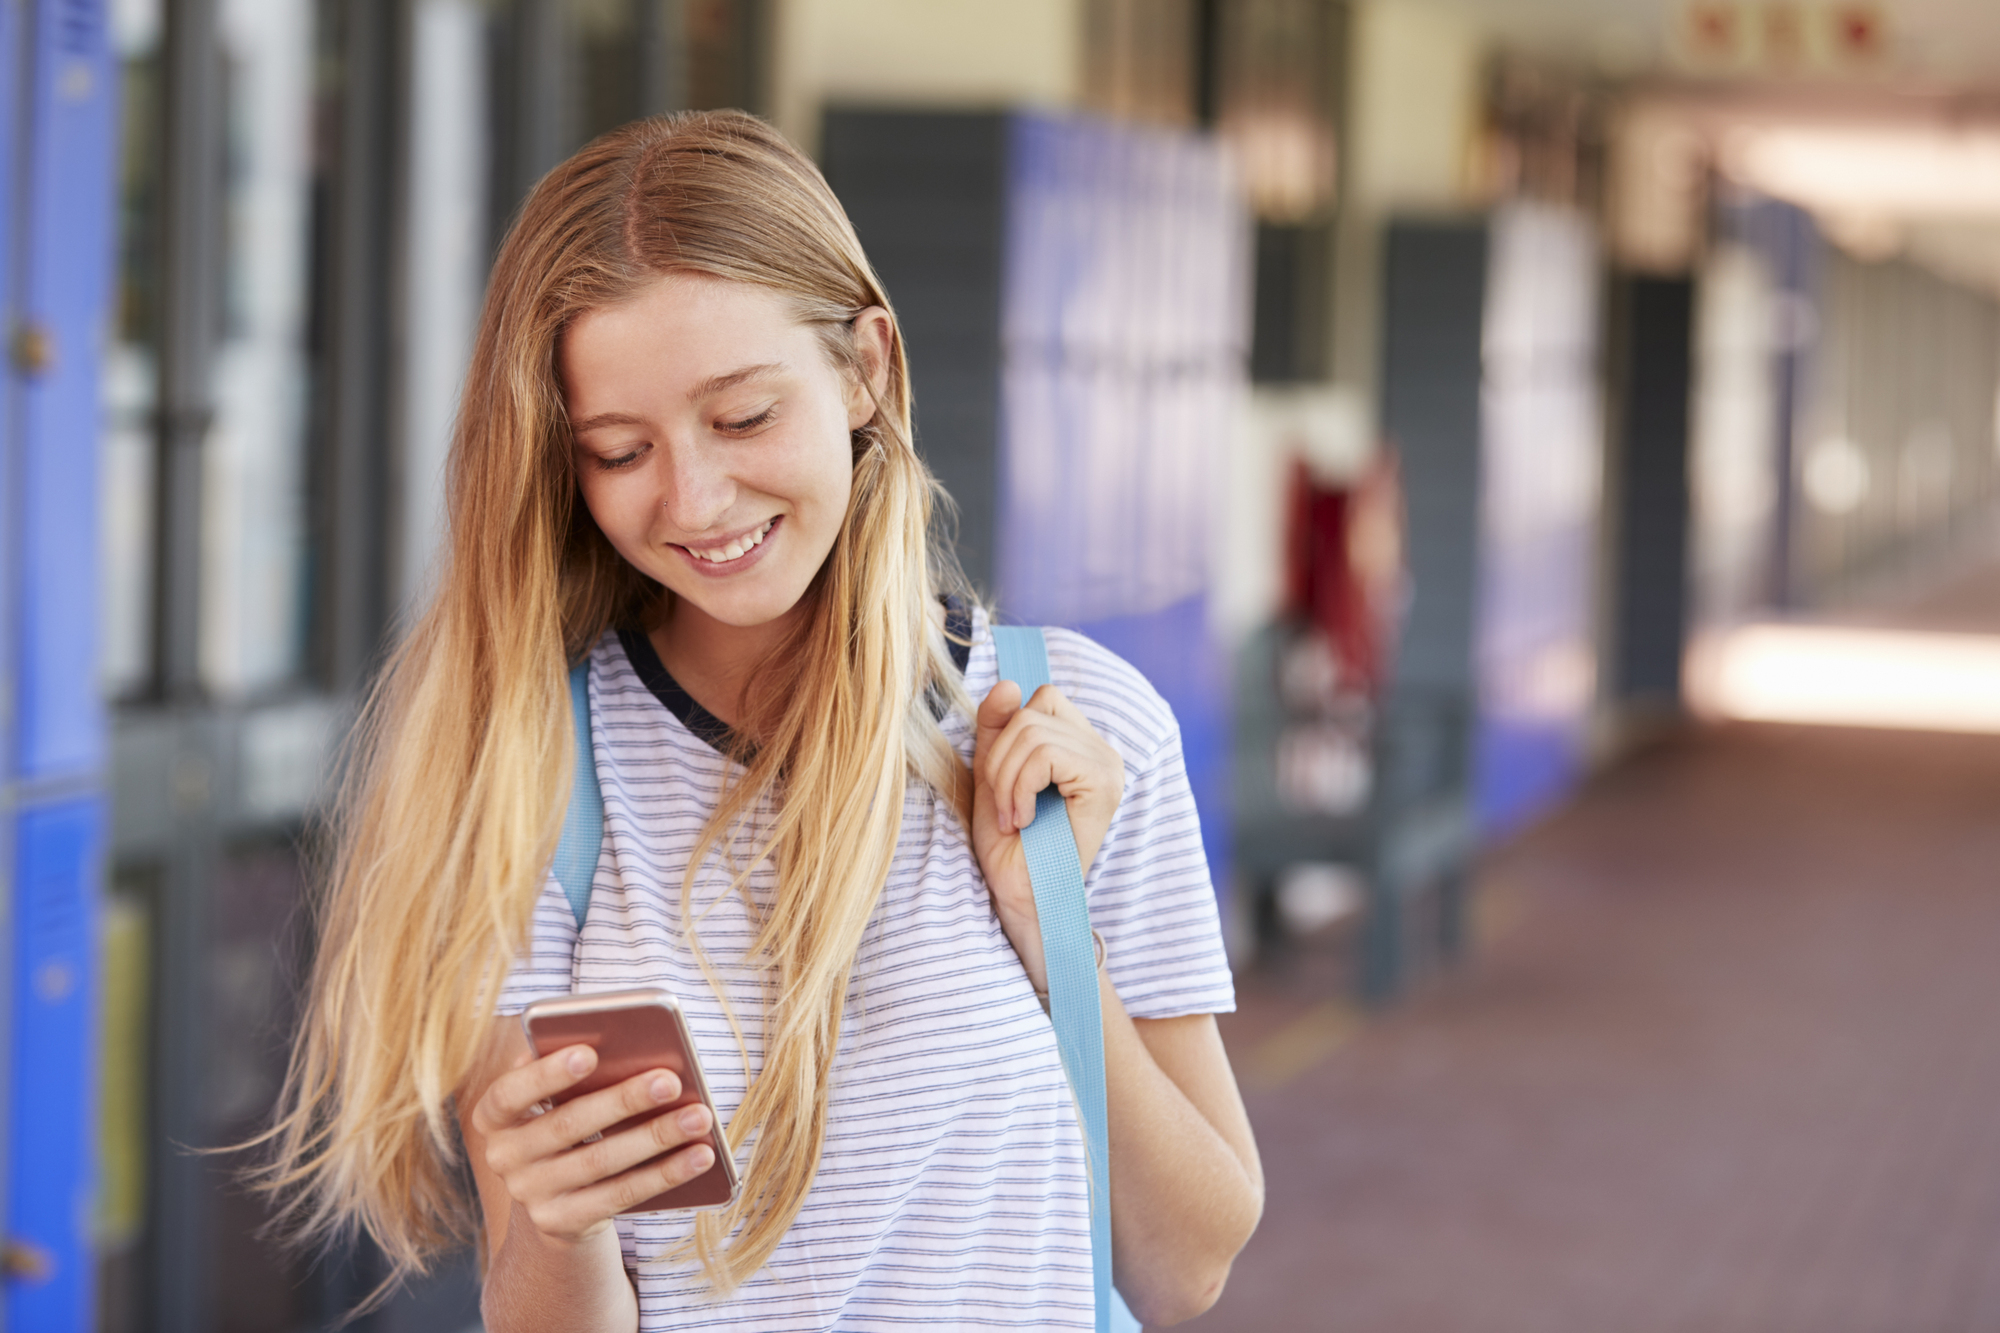 happy-teenage-girl-using-smartphone-in-school-corr-PJT7HVC